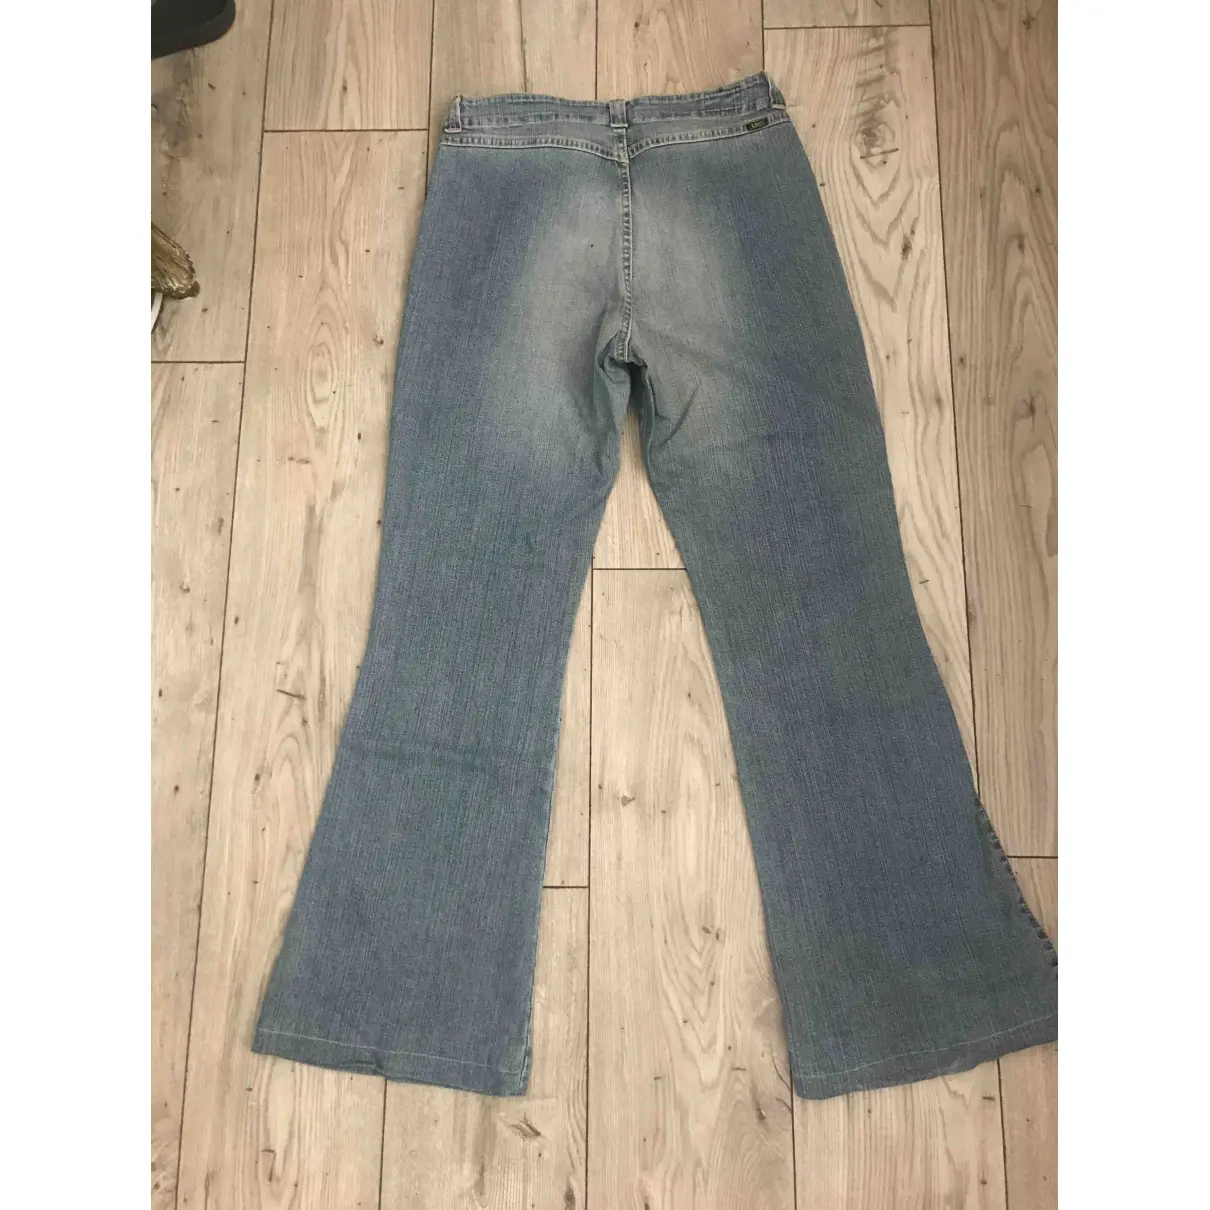 Buy Lee Blue Cotton - elasthane Jeans online - Vintage